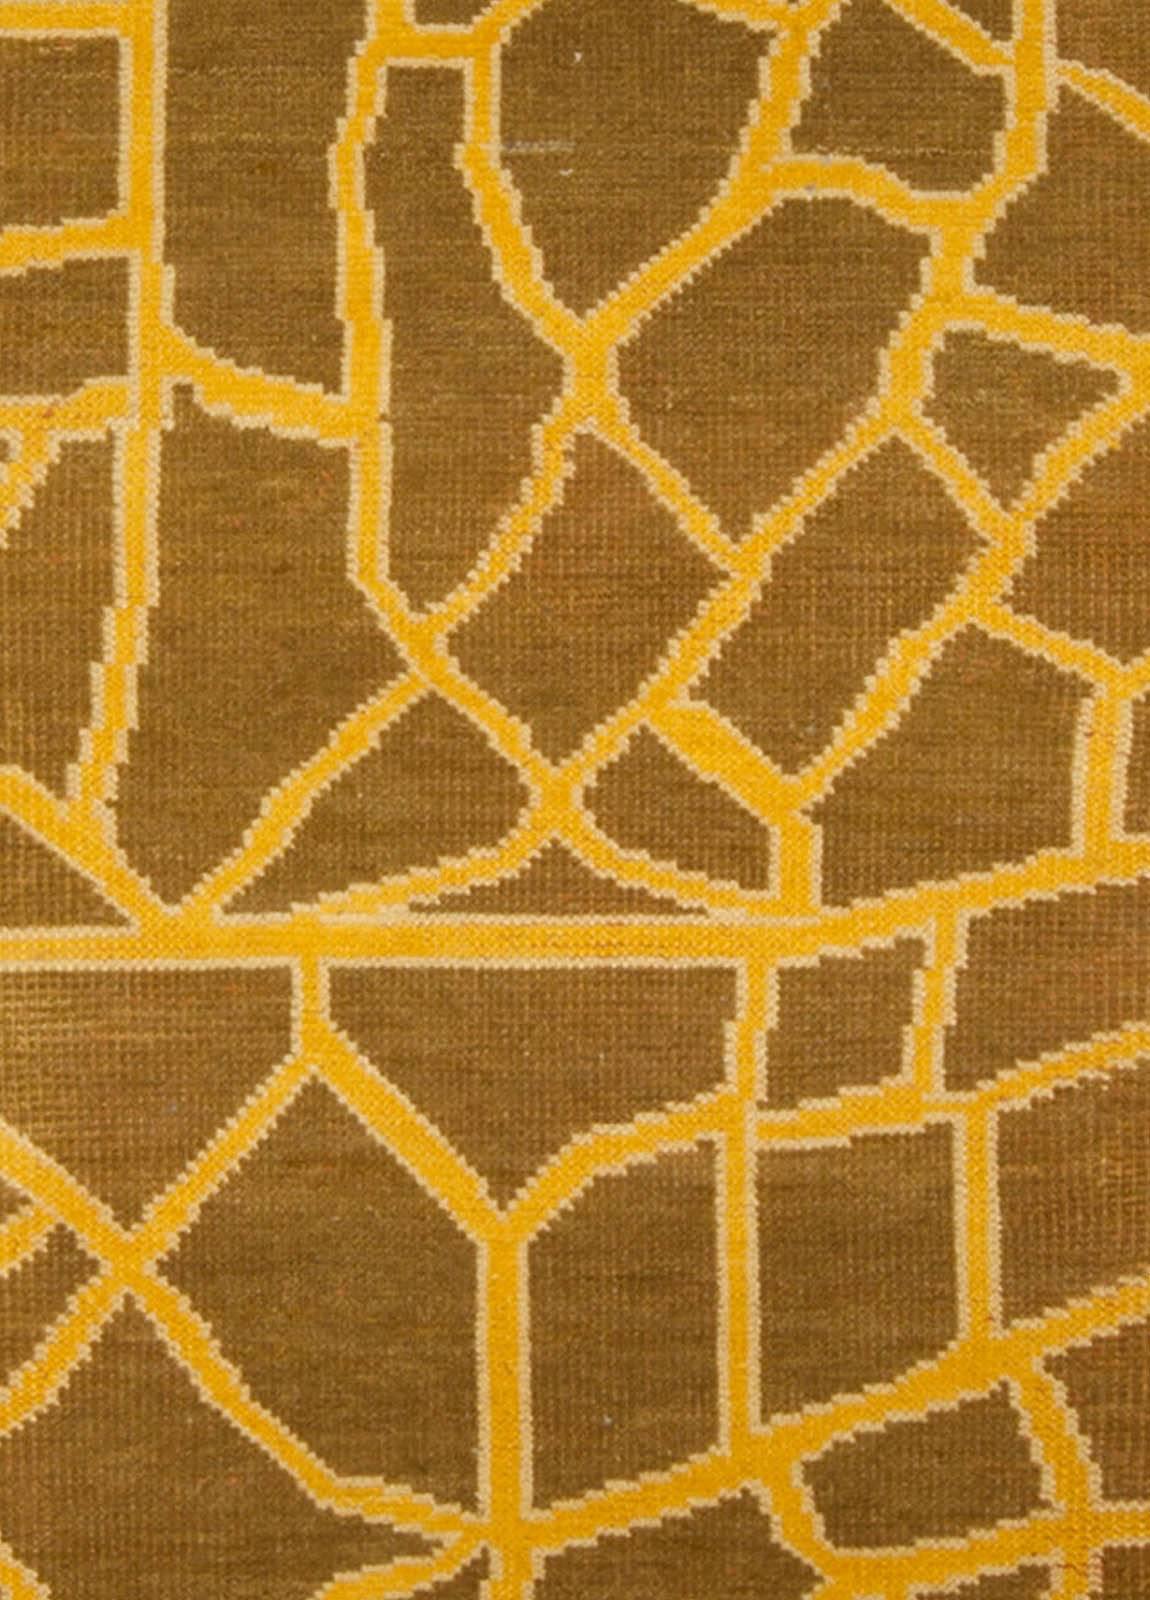 Contemporary abstract snake skin handmade wool rug by Doris Leslie Blau.
Size: 8'0